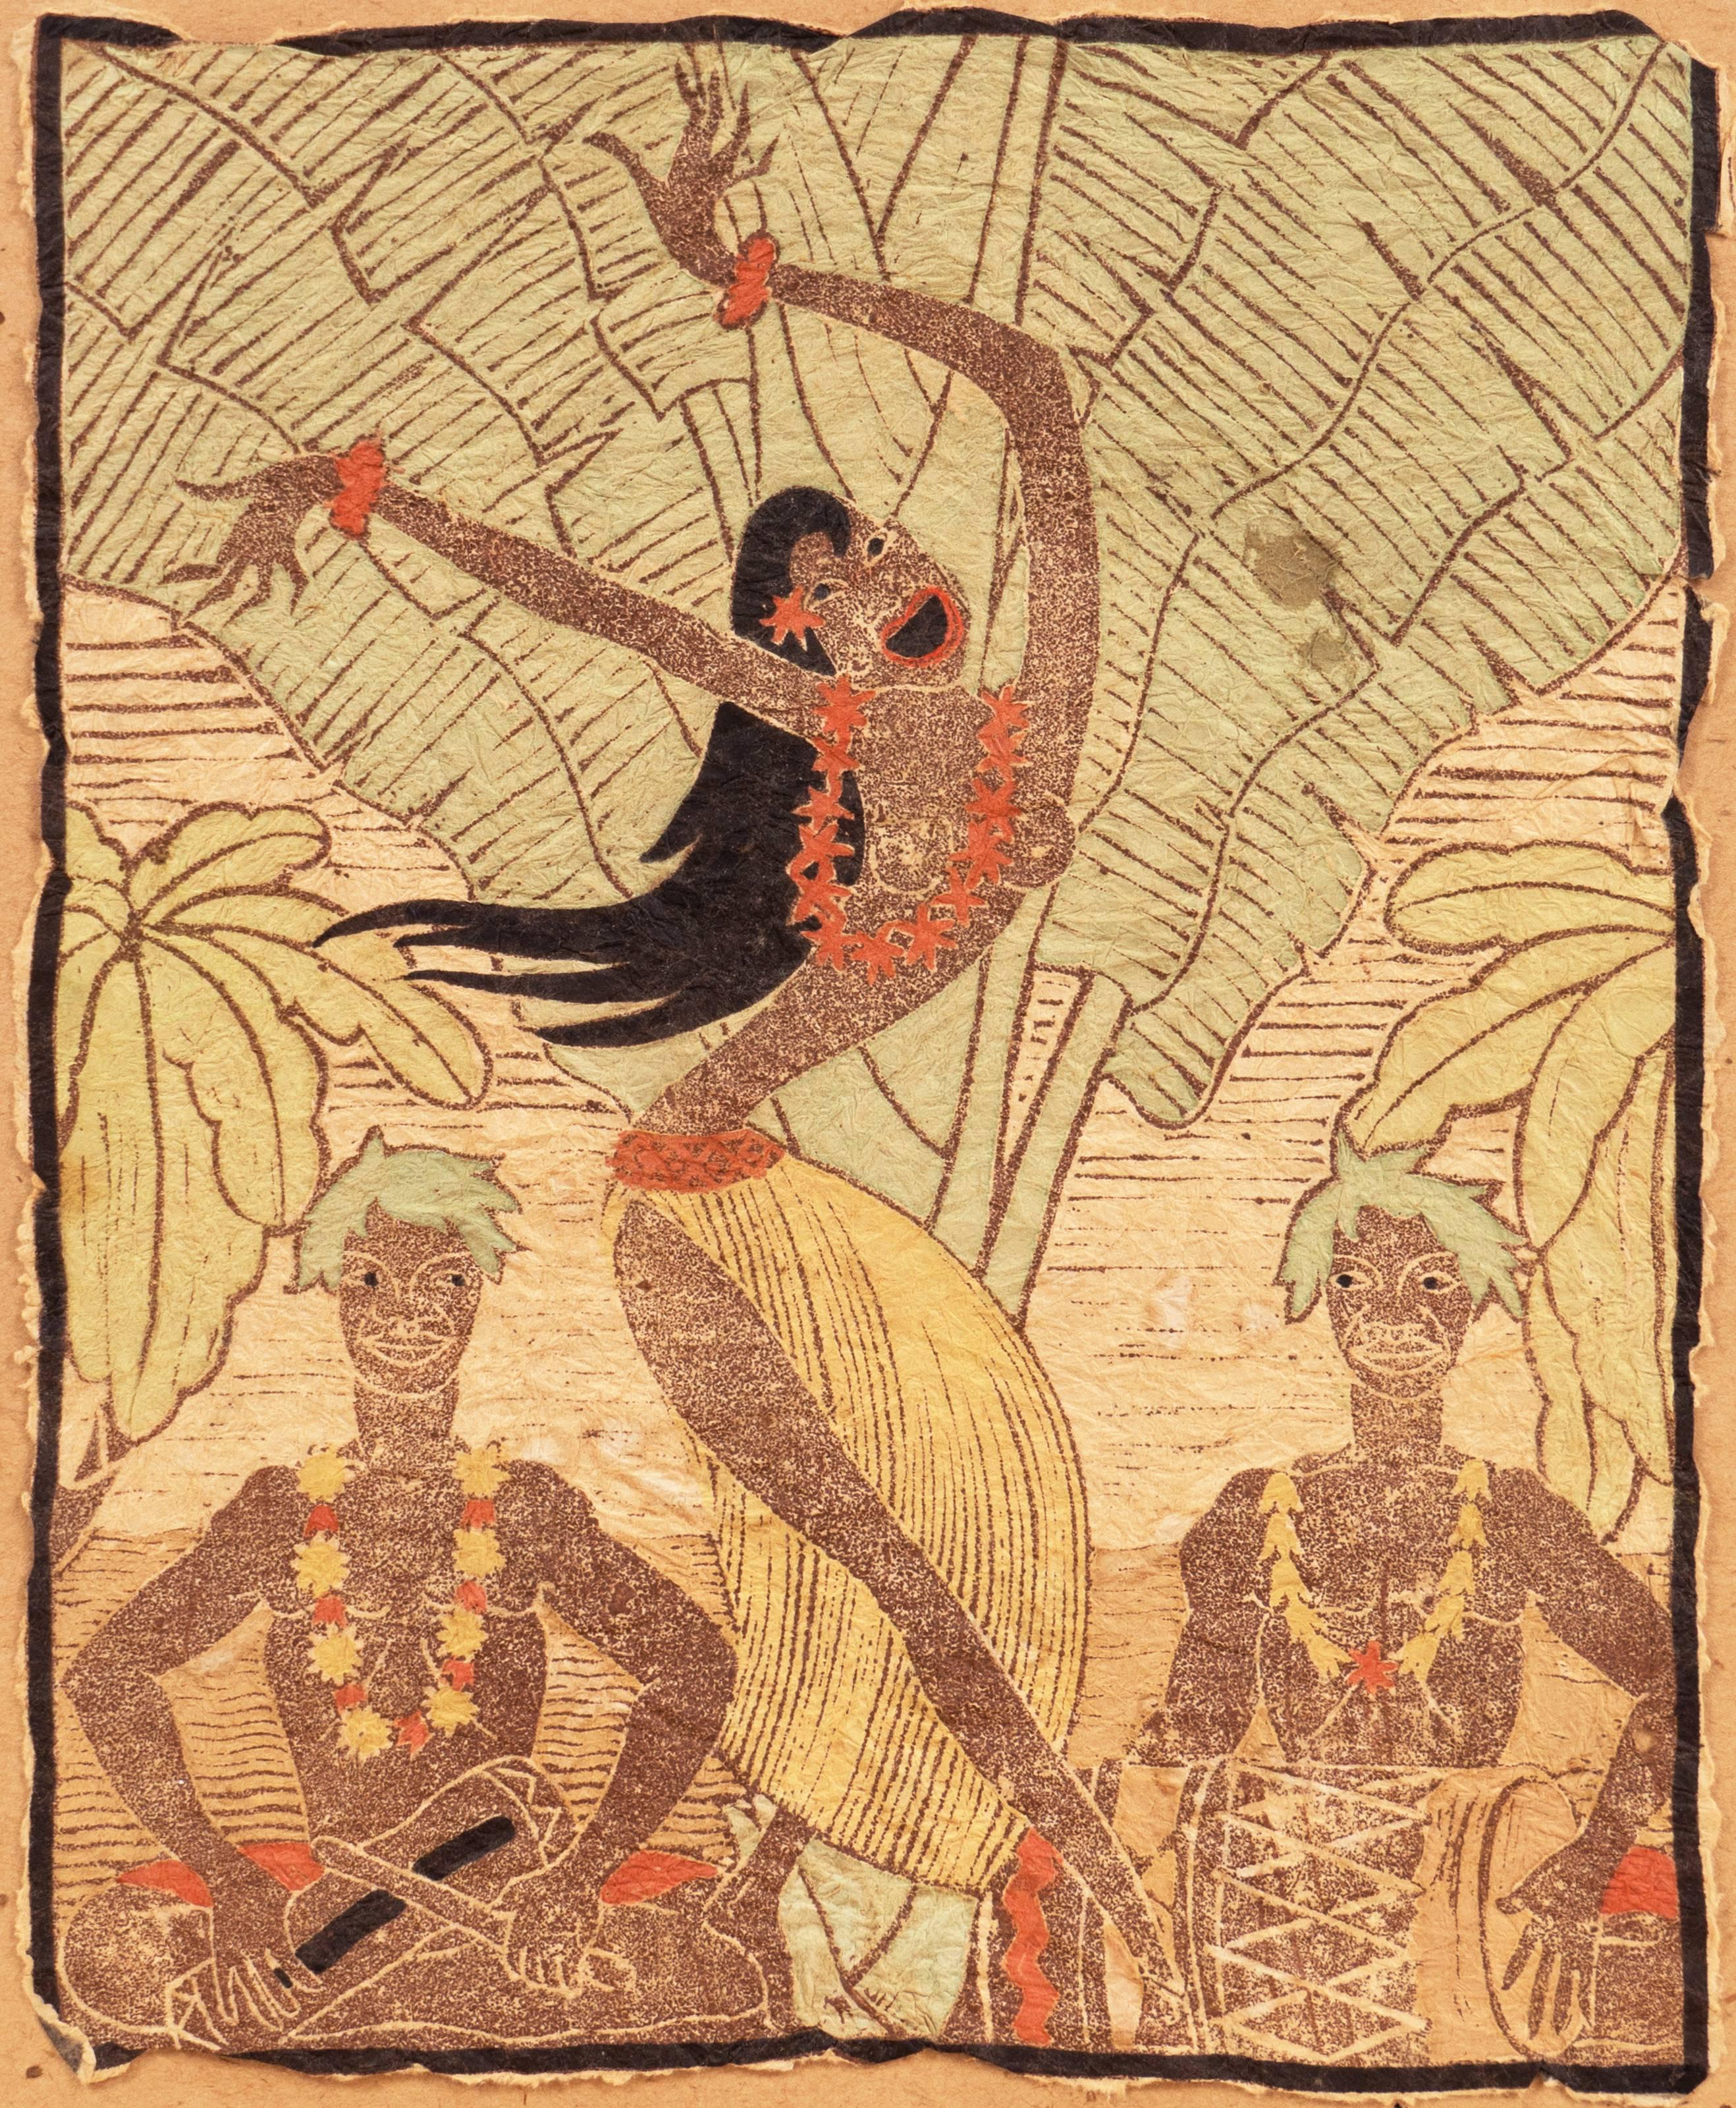 Hal Steward Wilcox Figurative Print - 'Tahitian Dancer with Drummers', California Artist, Honolulu, Mexico, San Diego